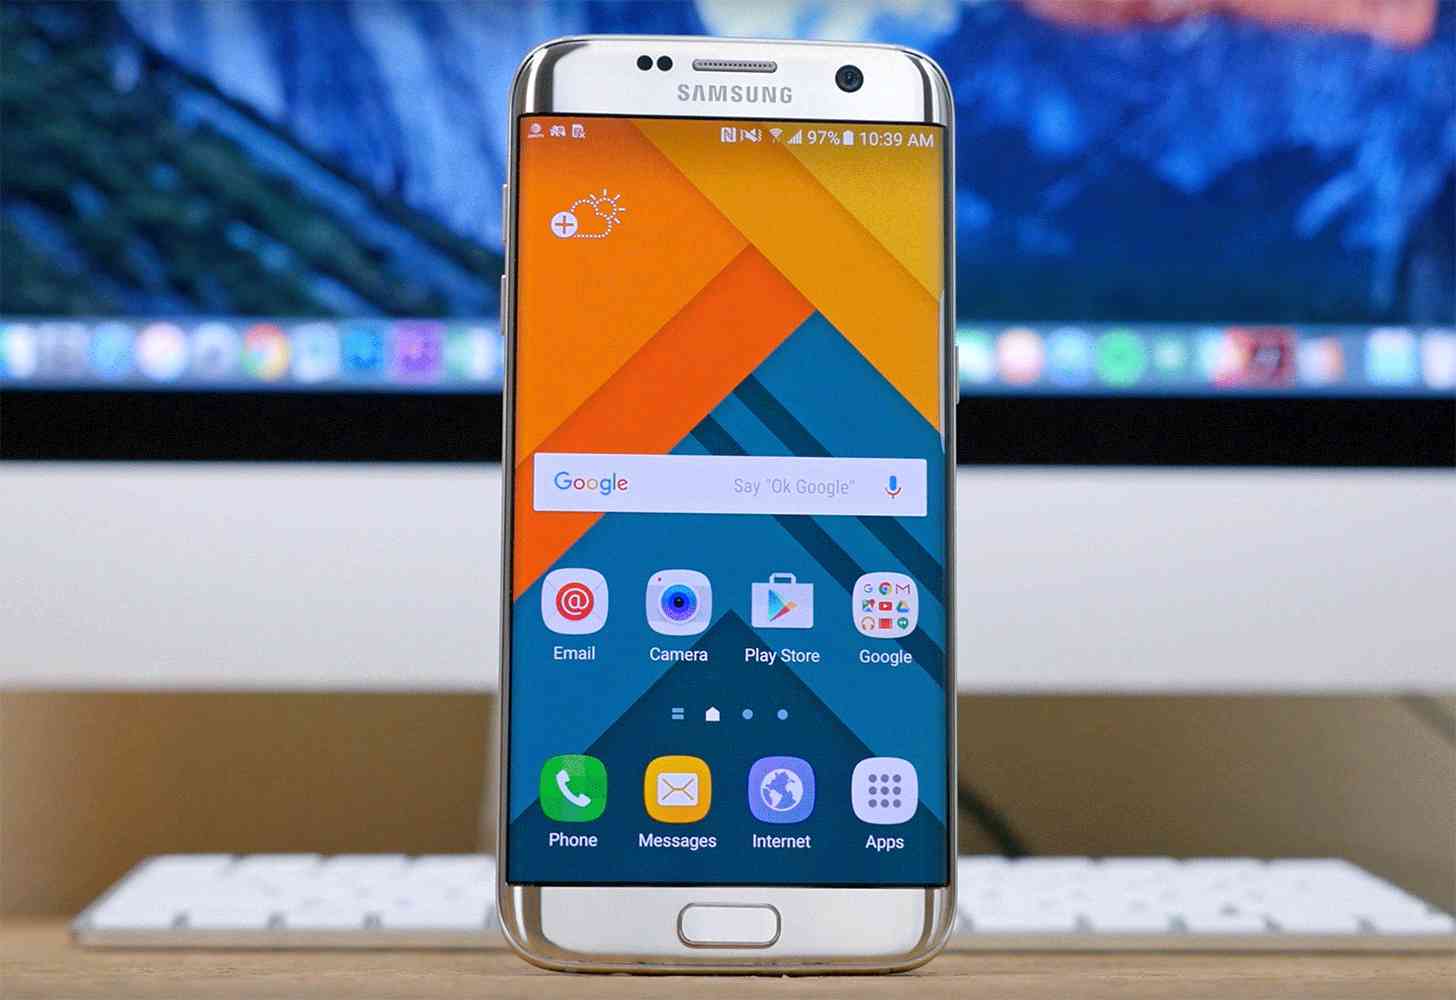 Samsung Galaxy S7 edge hands-on large